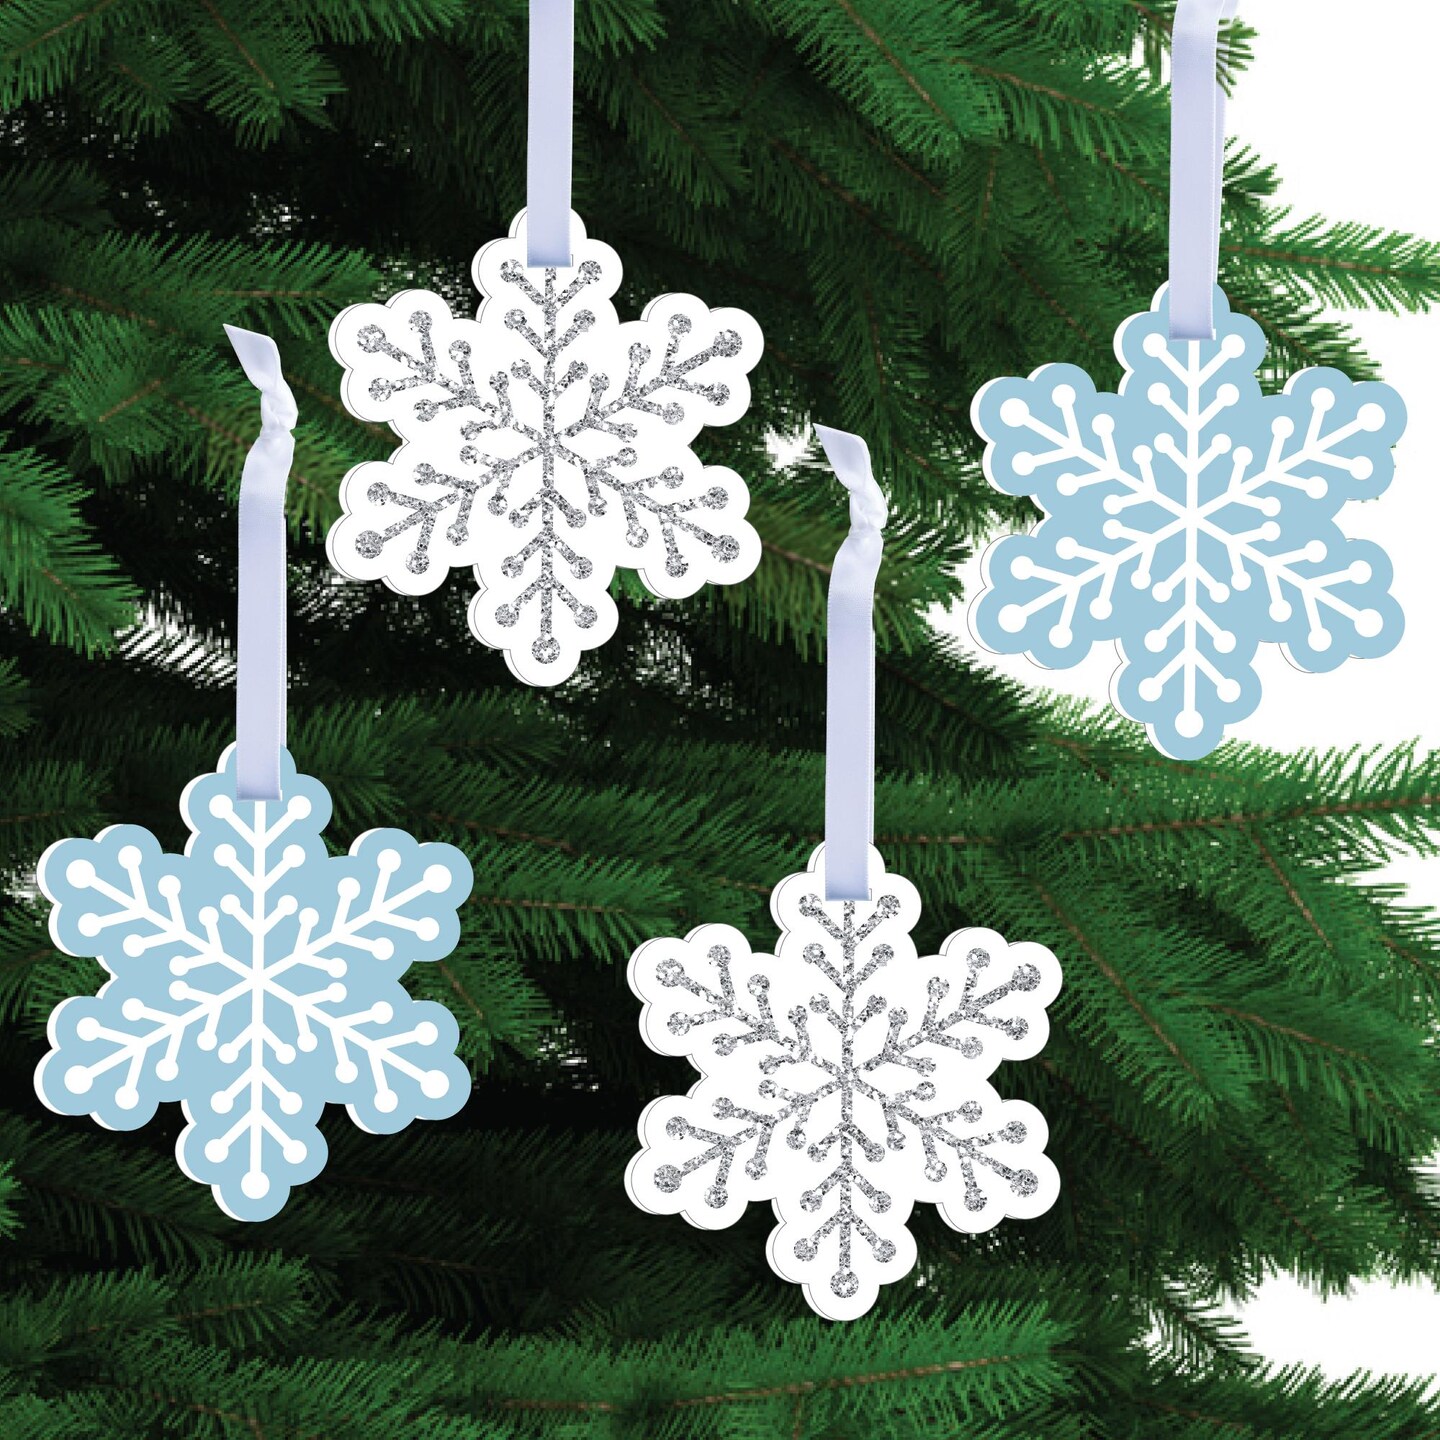 Big Dot Of Happiness Winter Wonderland - Snowflake Holiday Party